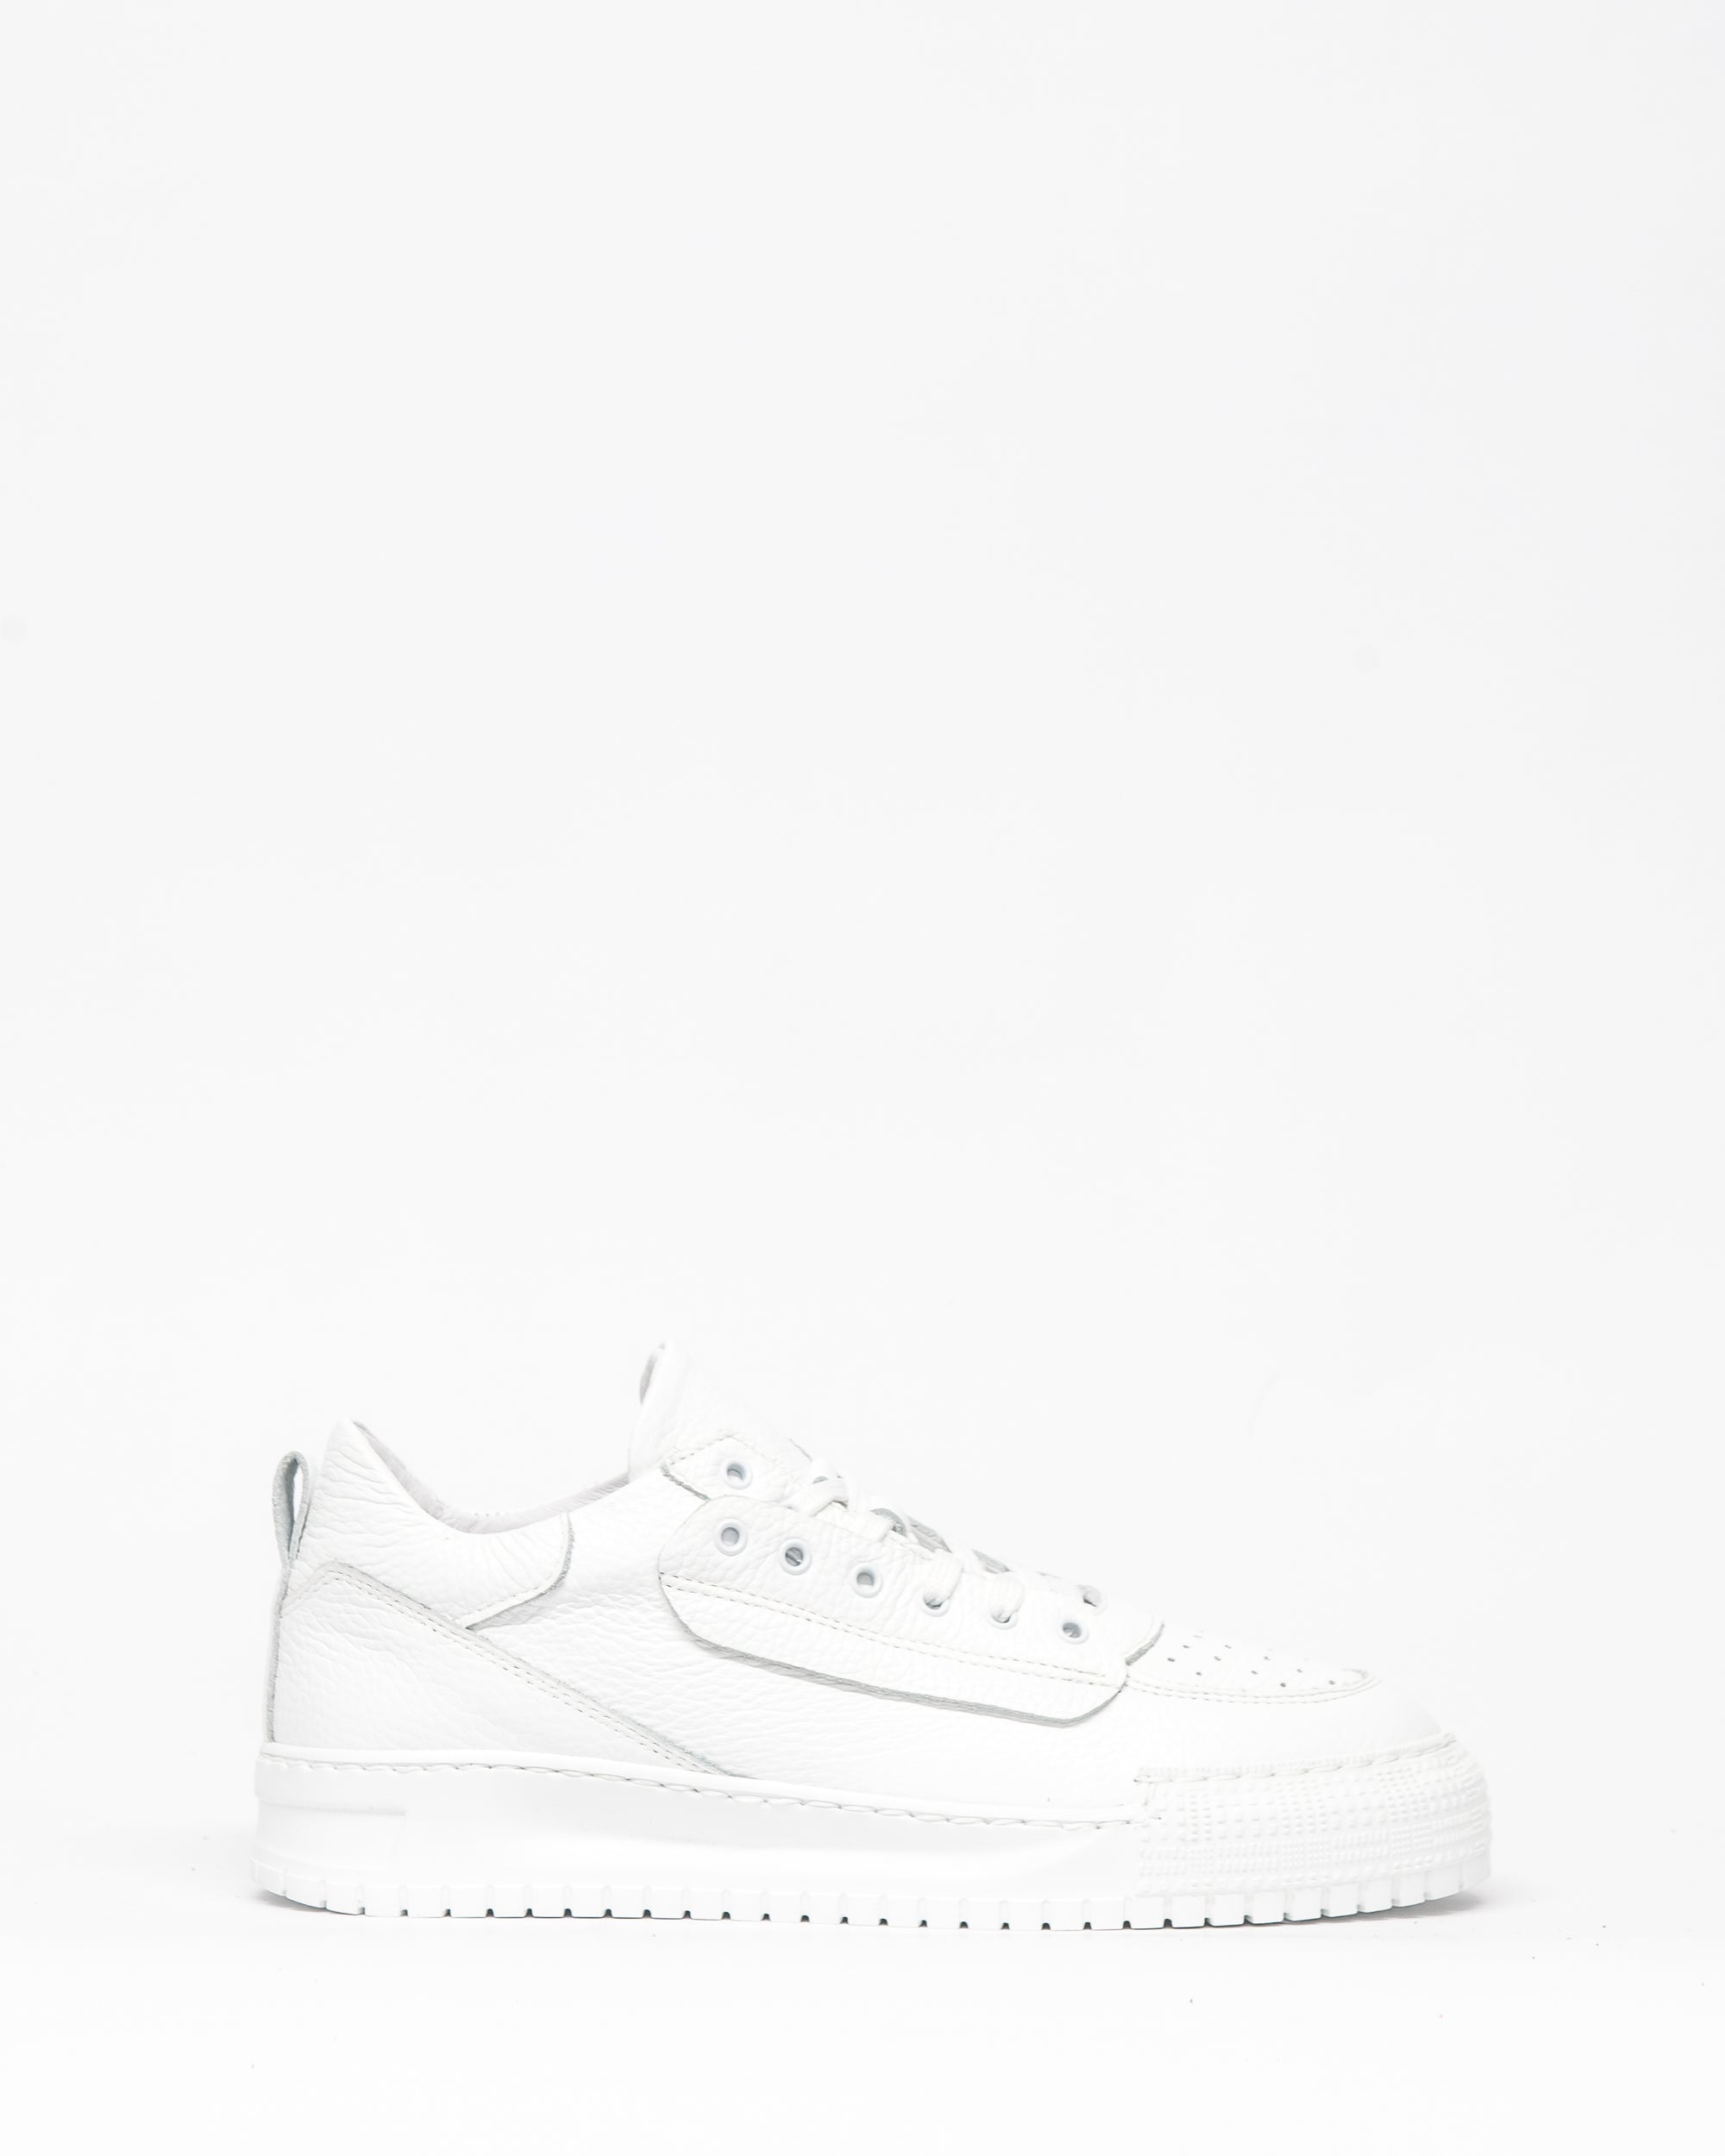 cache sneaker - white leather